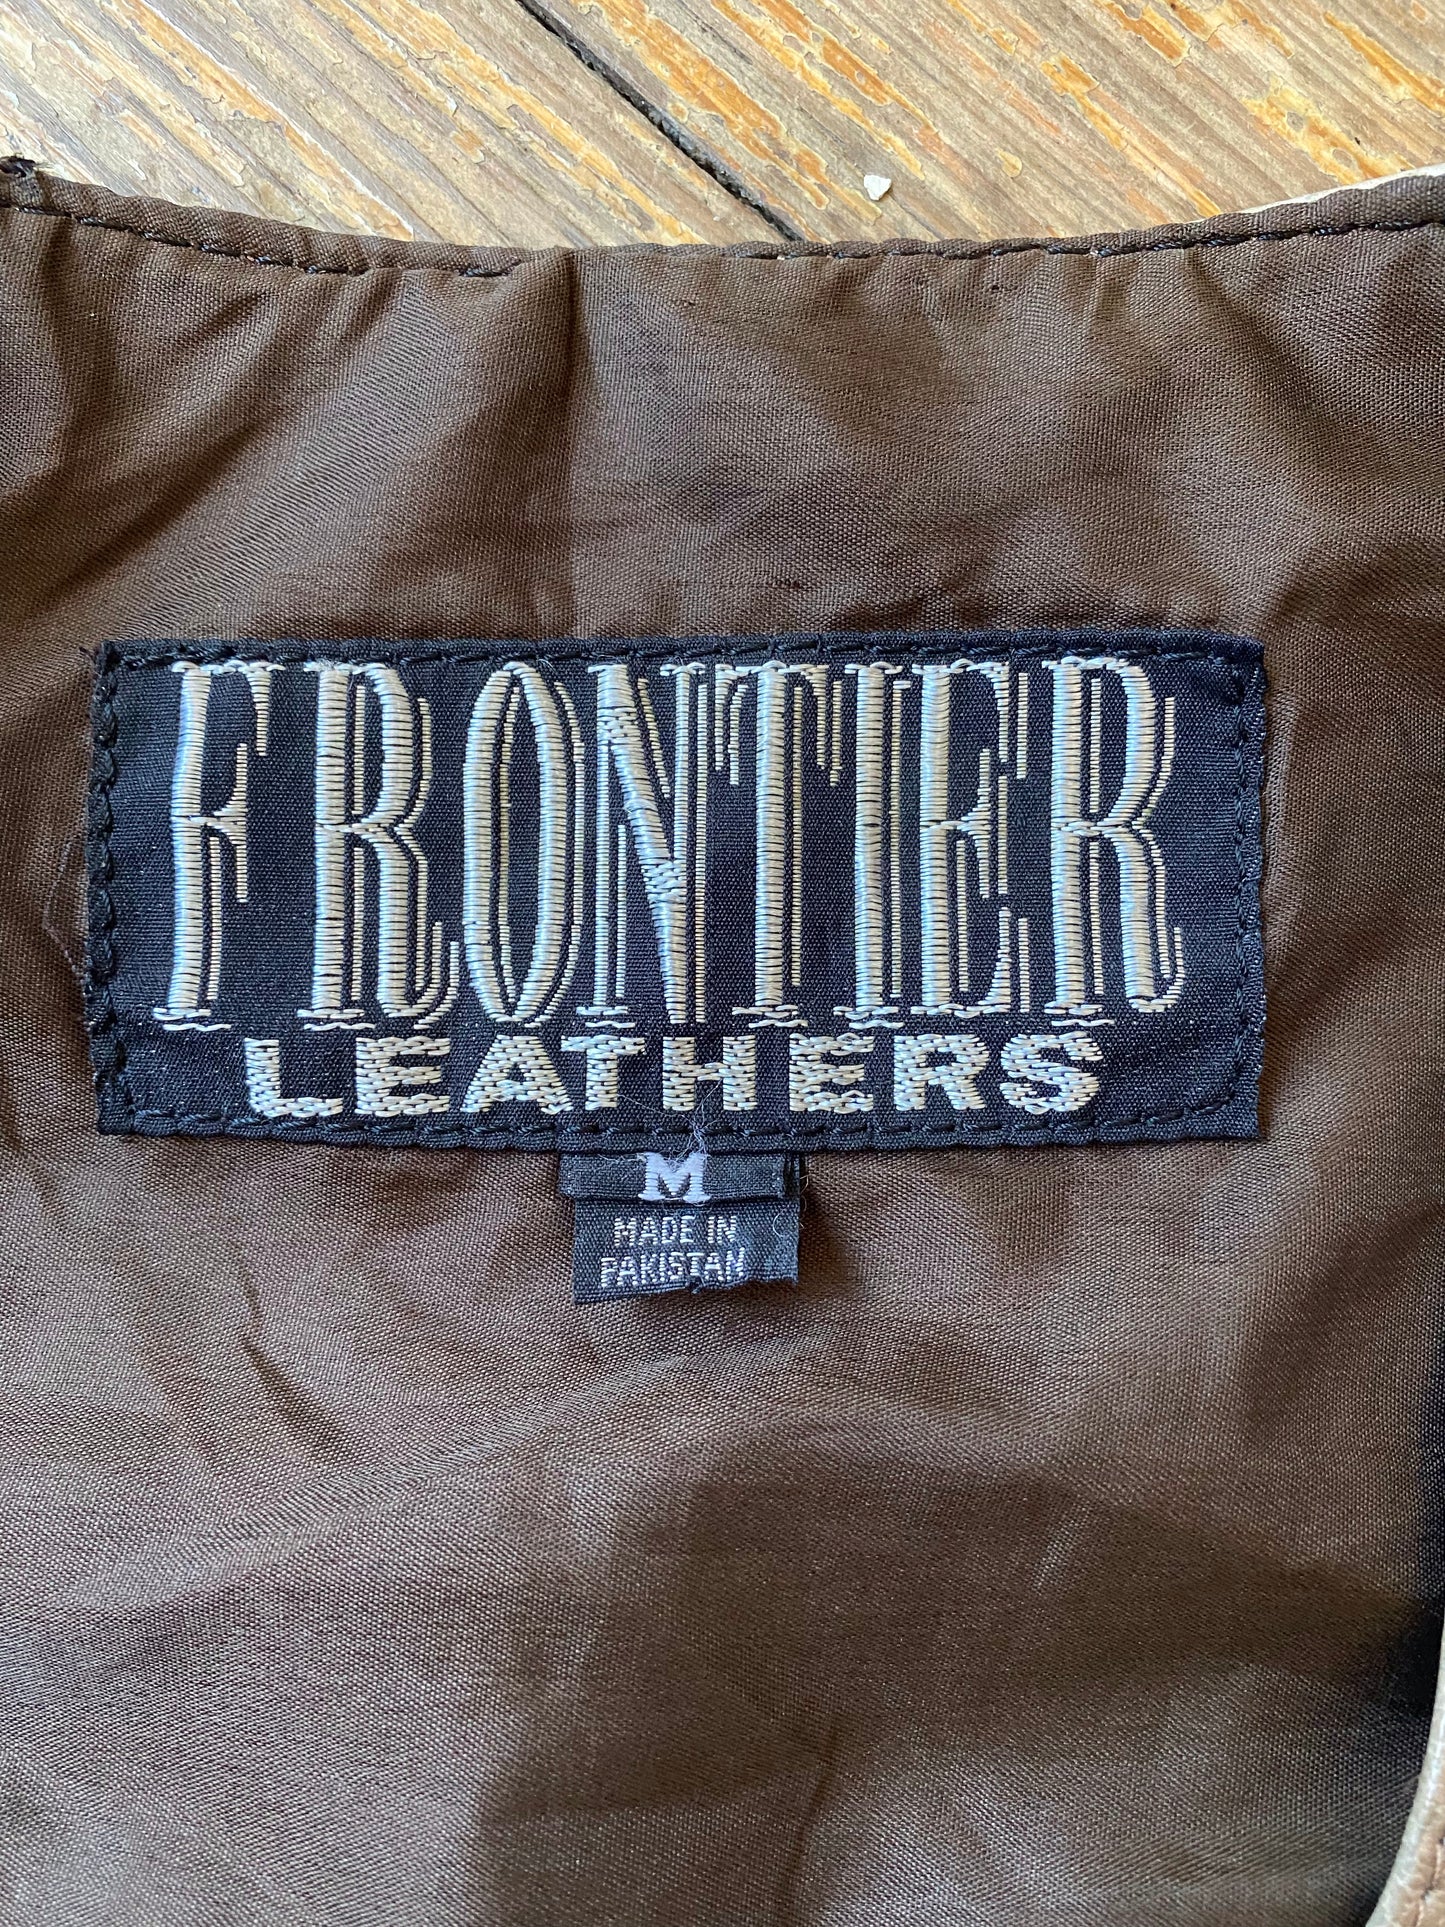 Frontier Leathers Tan Buffalo Nickel Chain Vest